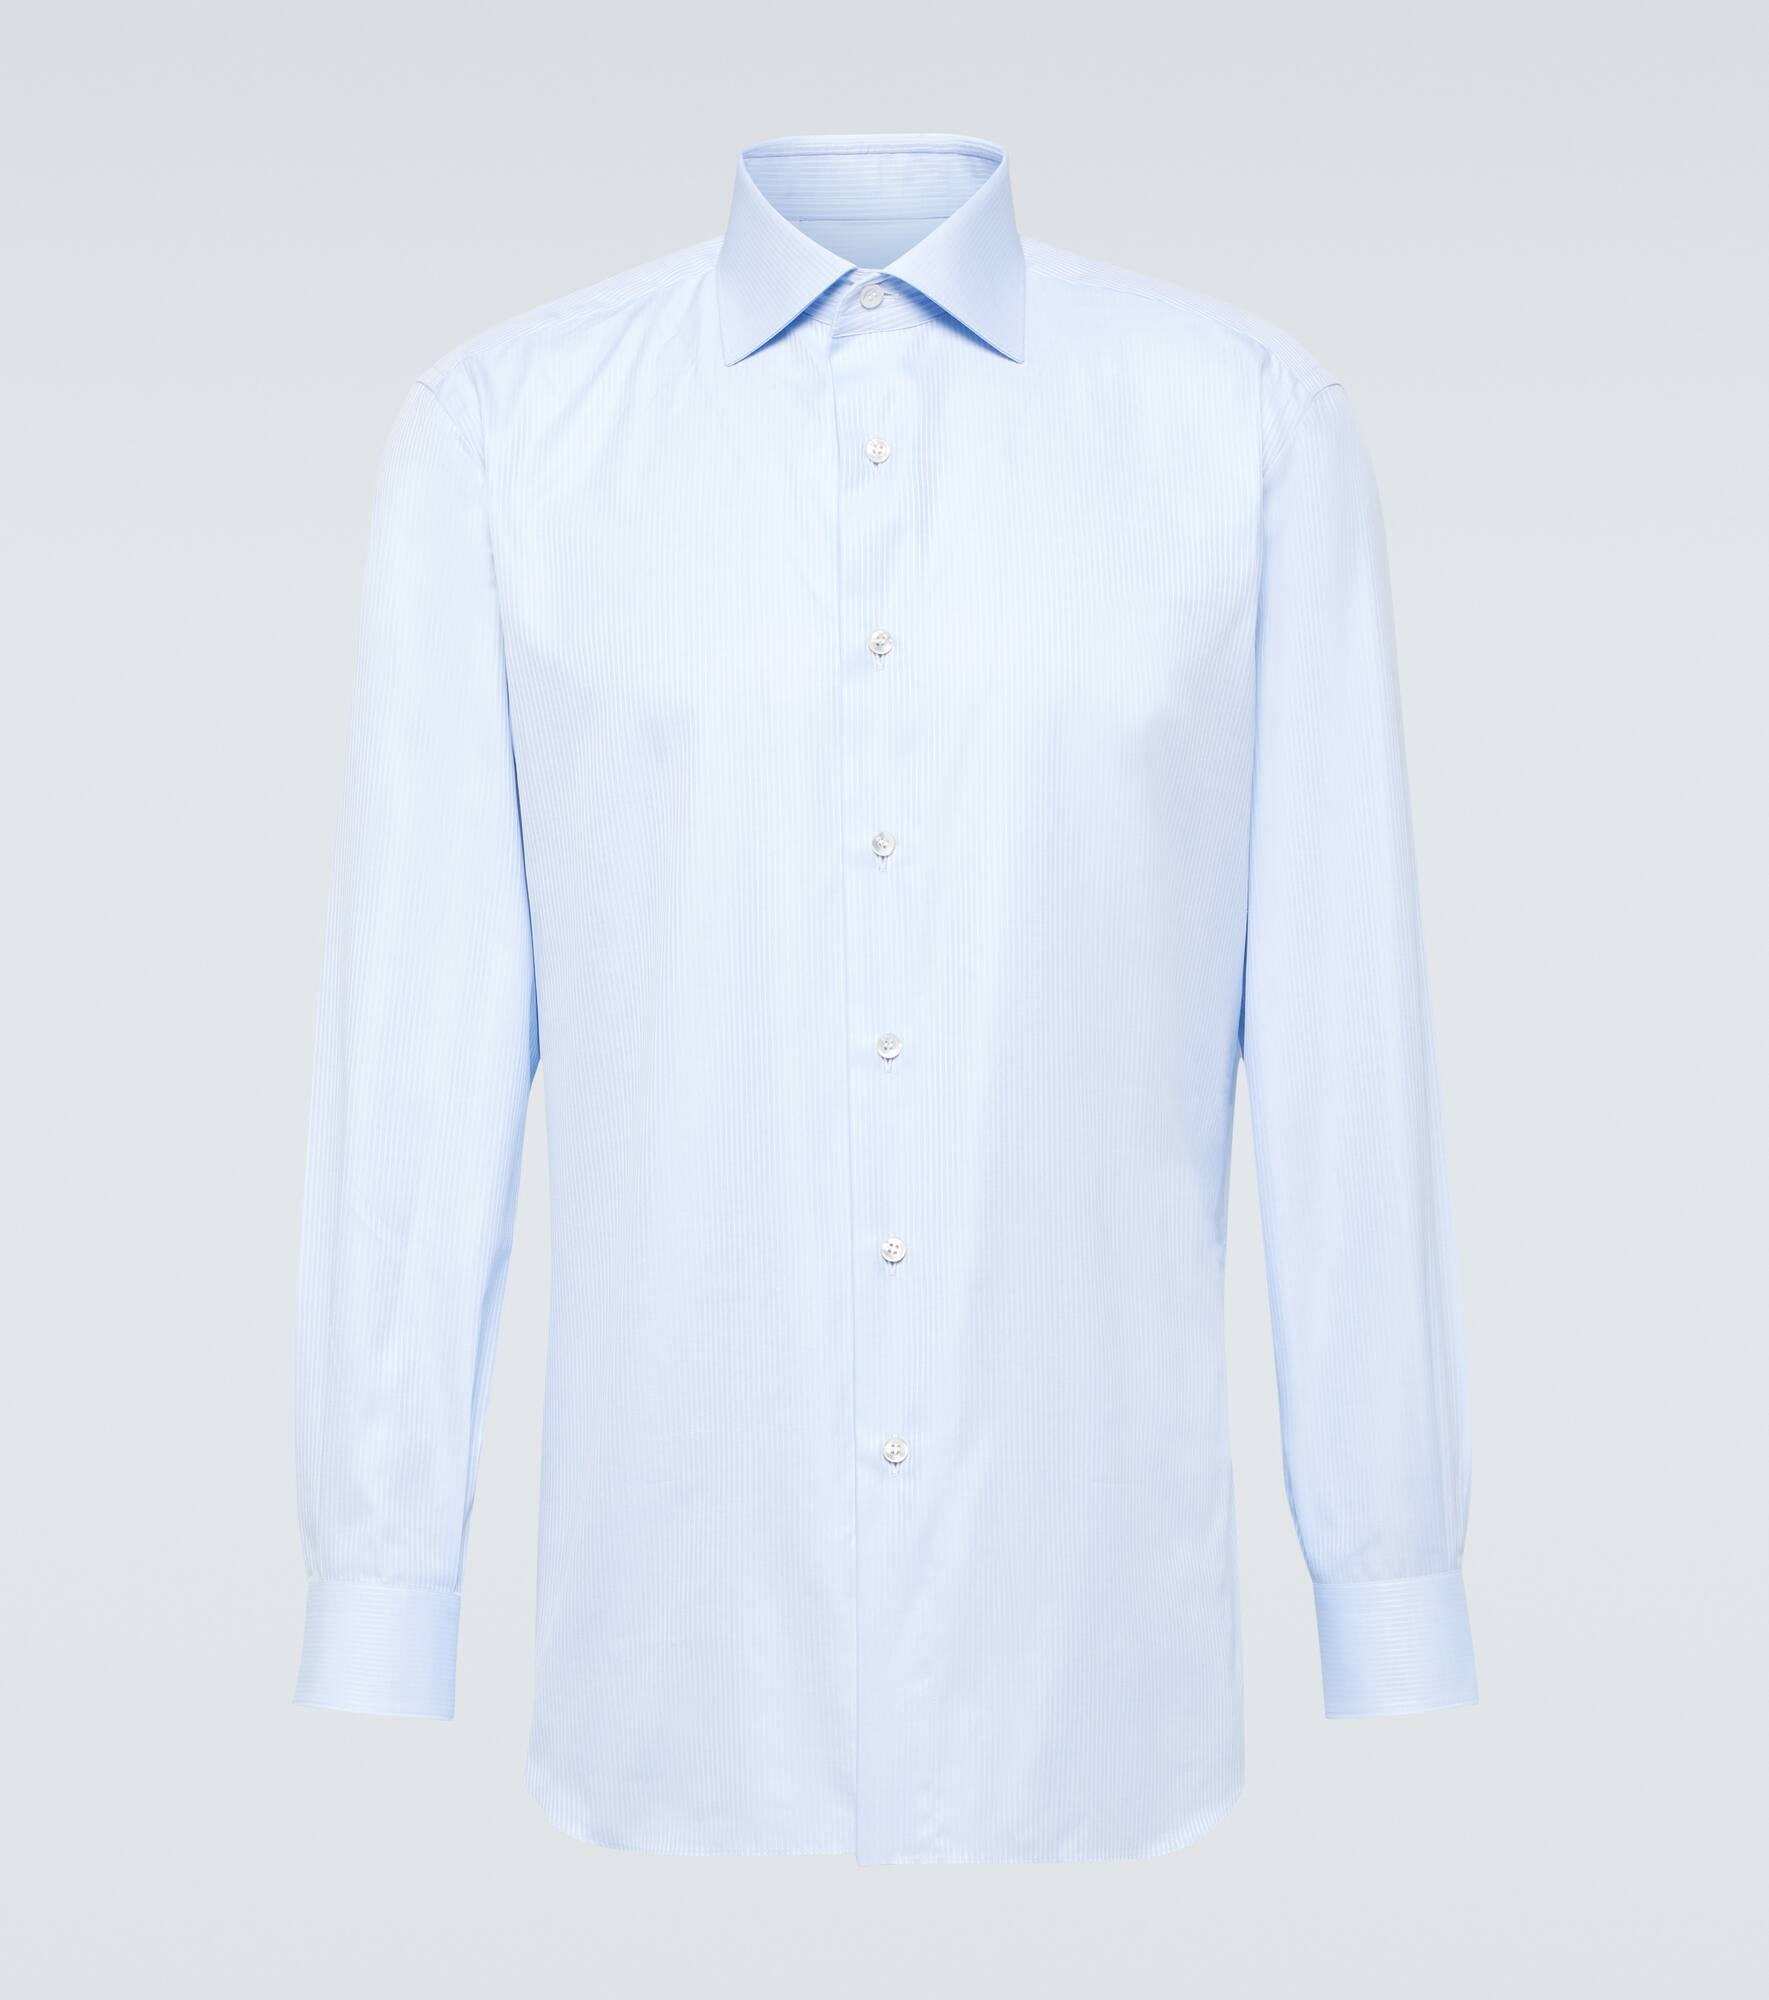 William cotton shirt - 1